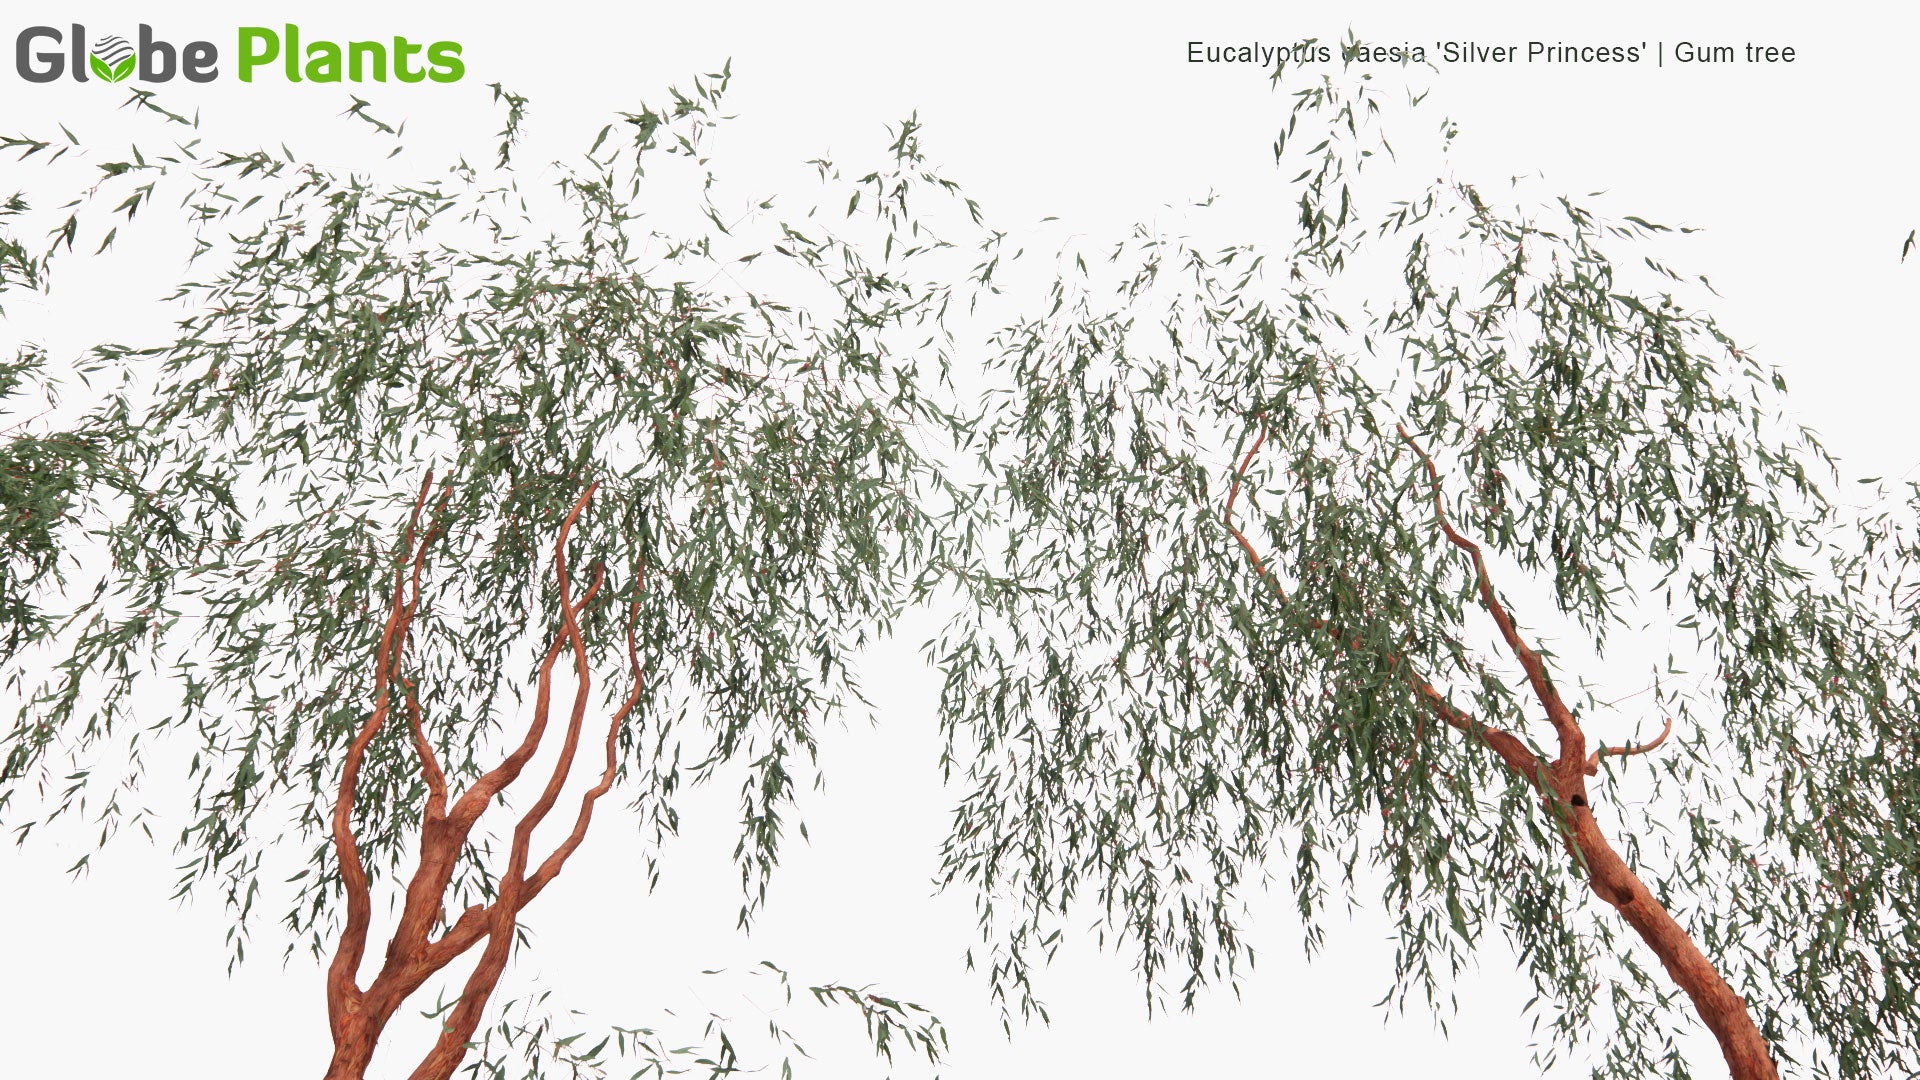 Low Poly Eucalyptus Caesia 'Silver Princess' - Gum Tree (3D Model)